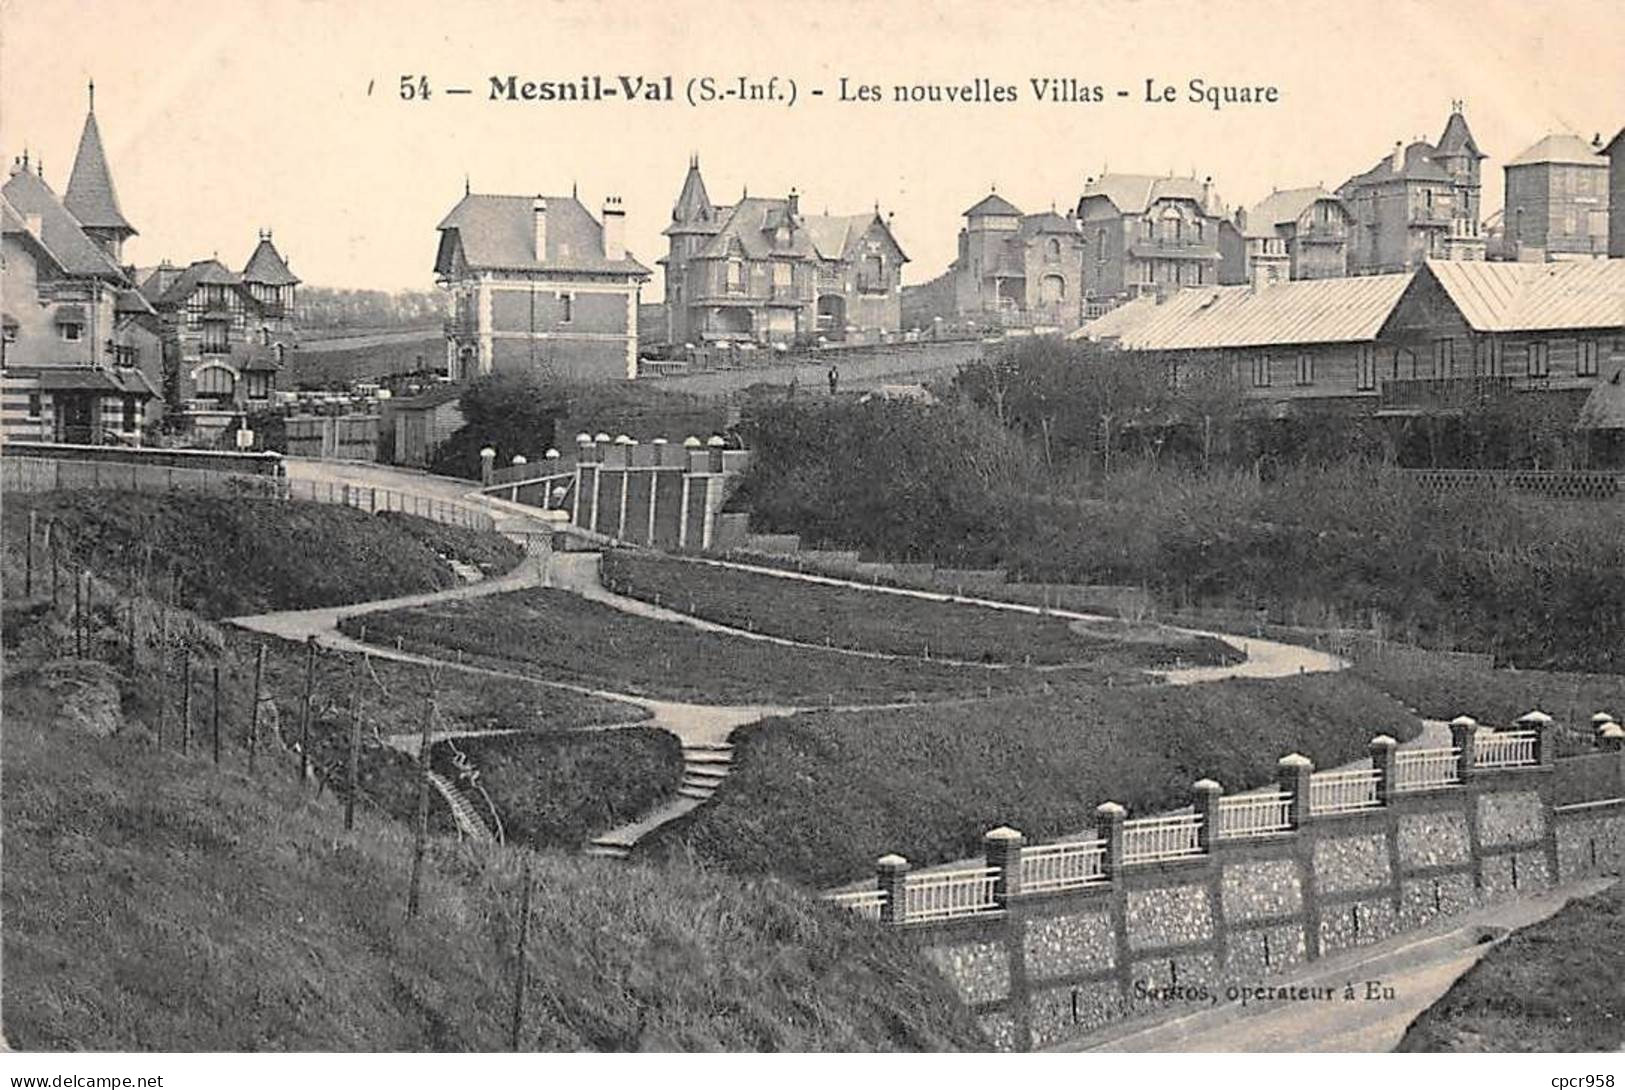 76 - MESNILVAL -  SAN26170 - Les Nouvelles Villas - Le Square - Mesnil-Val